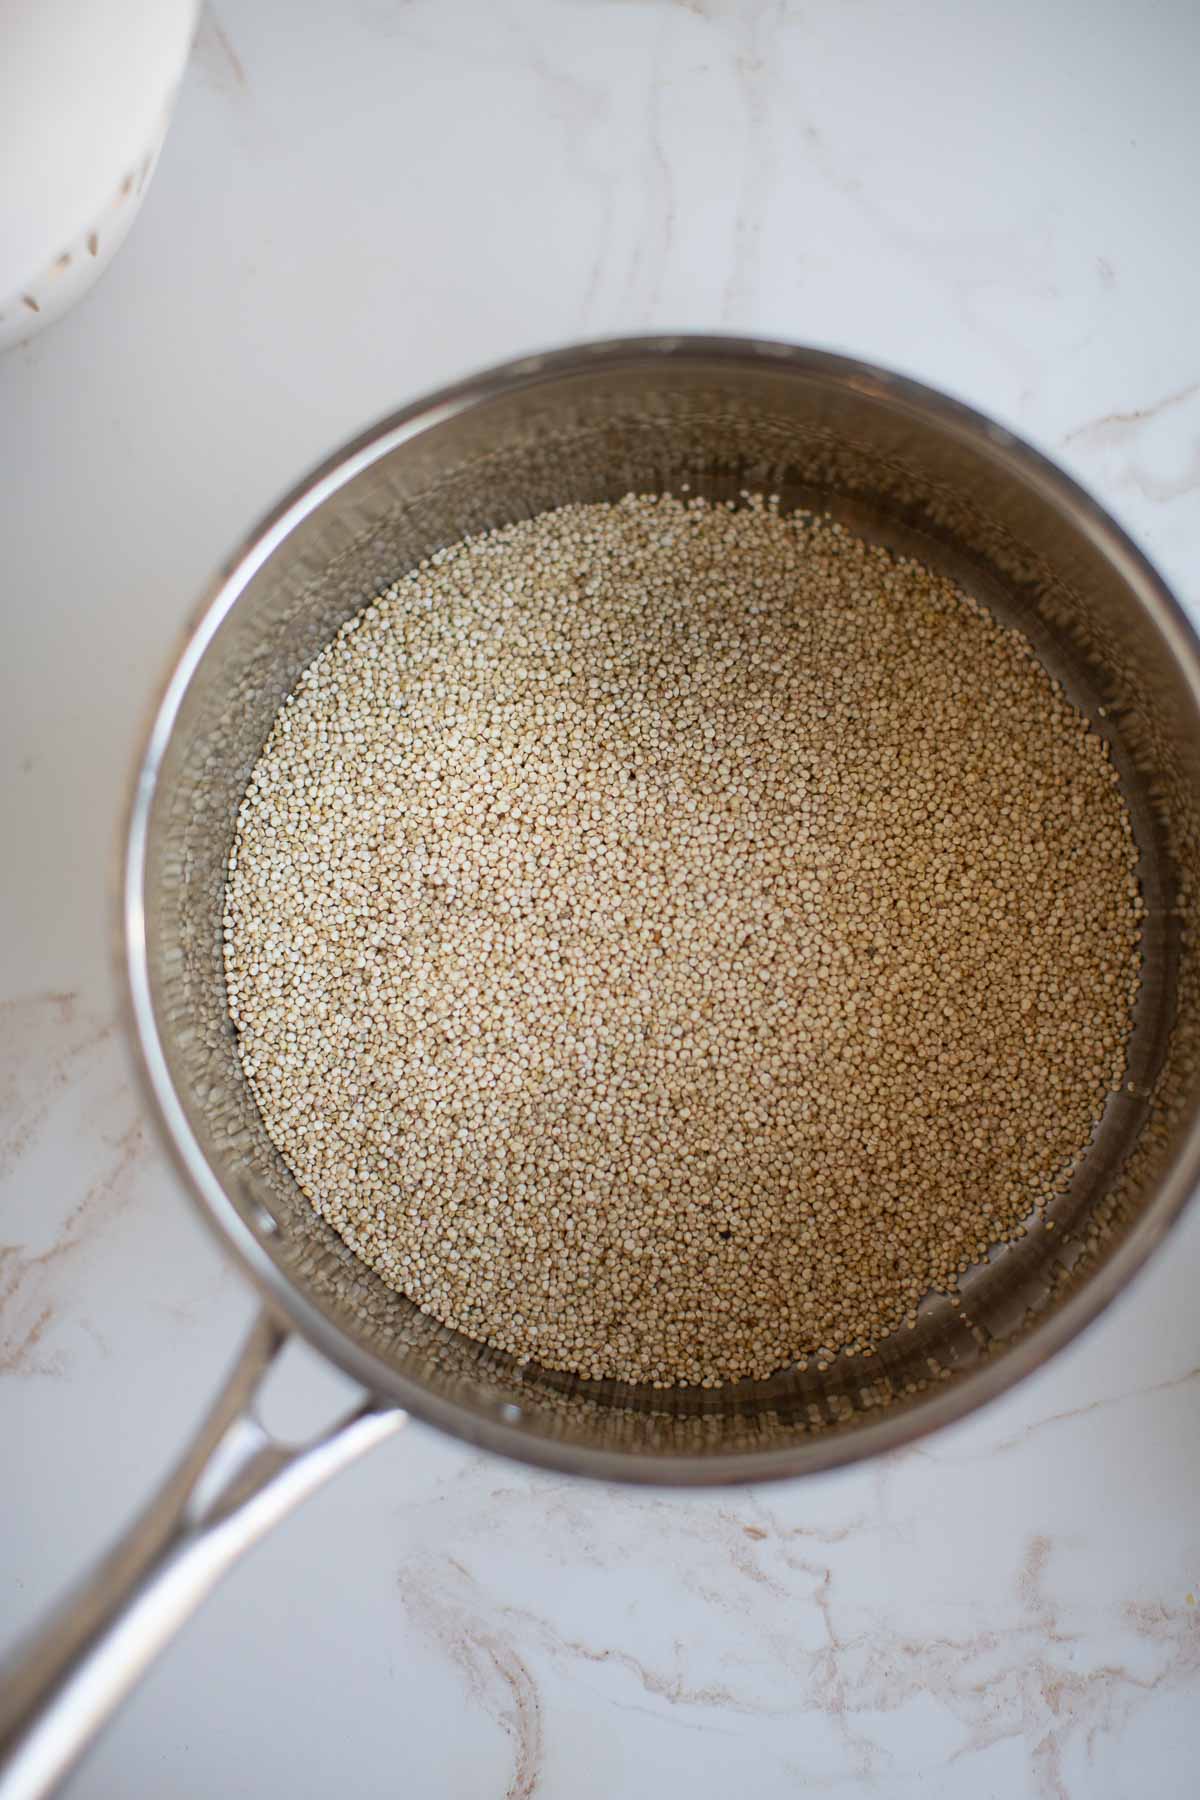 Quinoa in a saucepan.